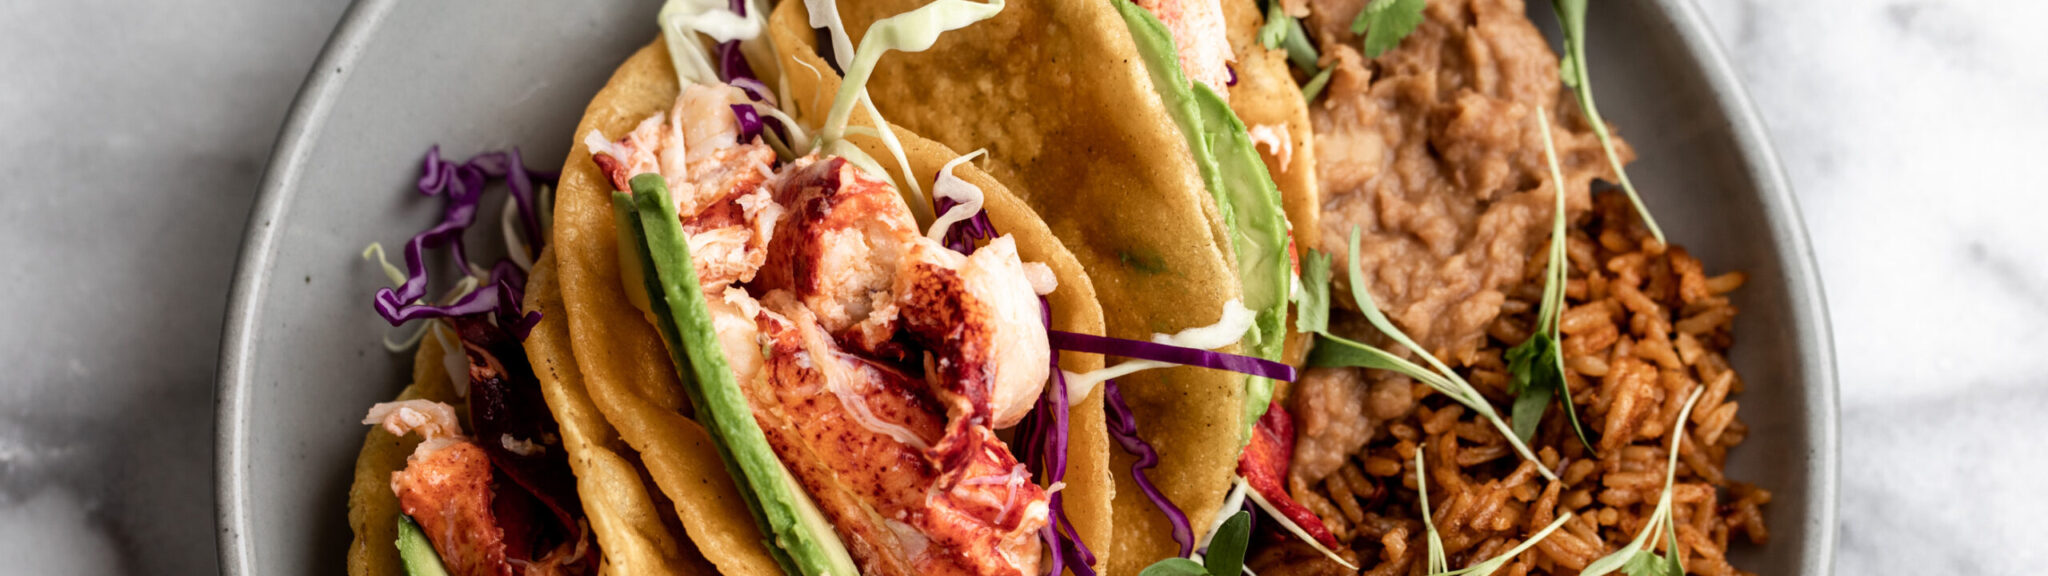 Maine Lobster Truffle Tacos recipe image